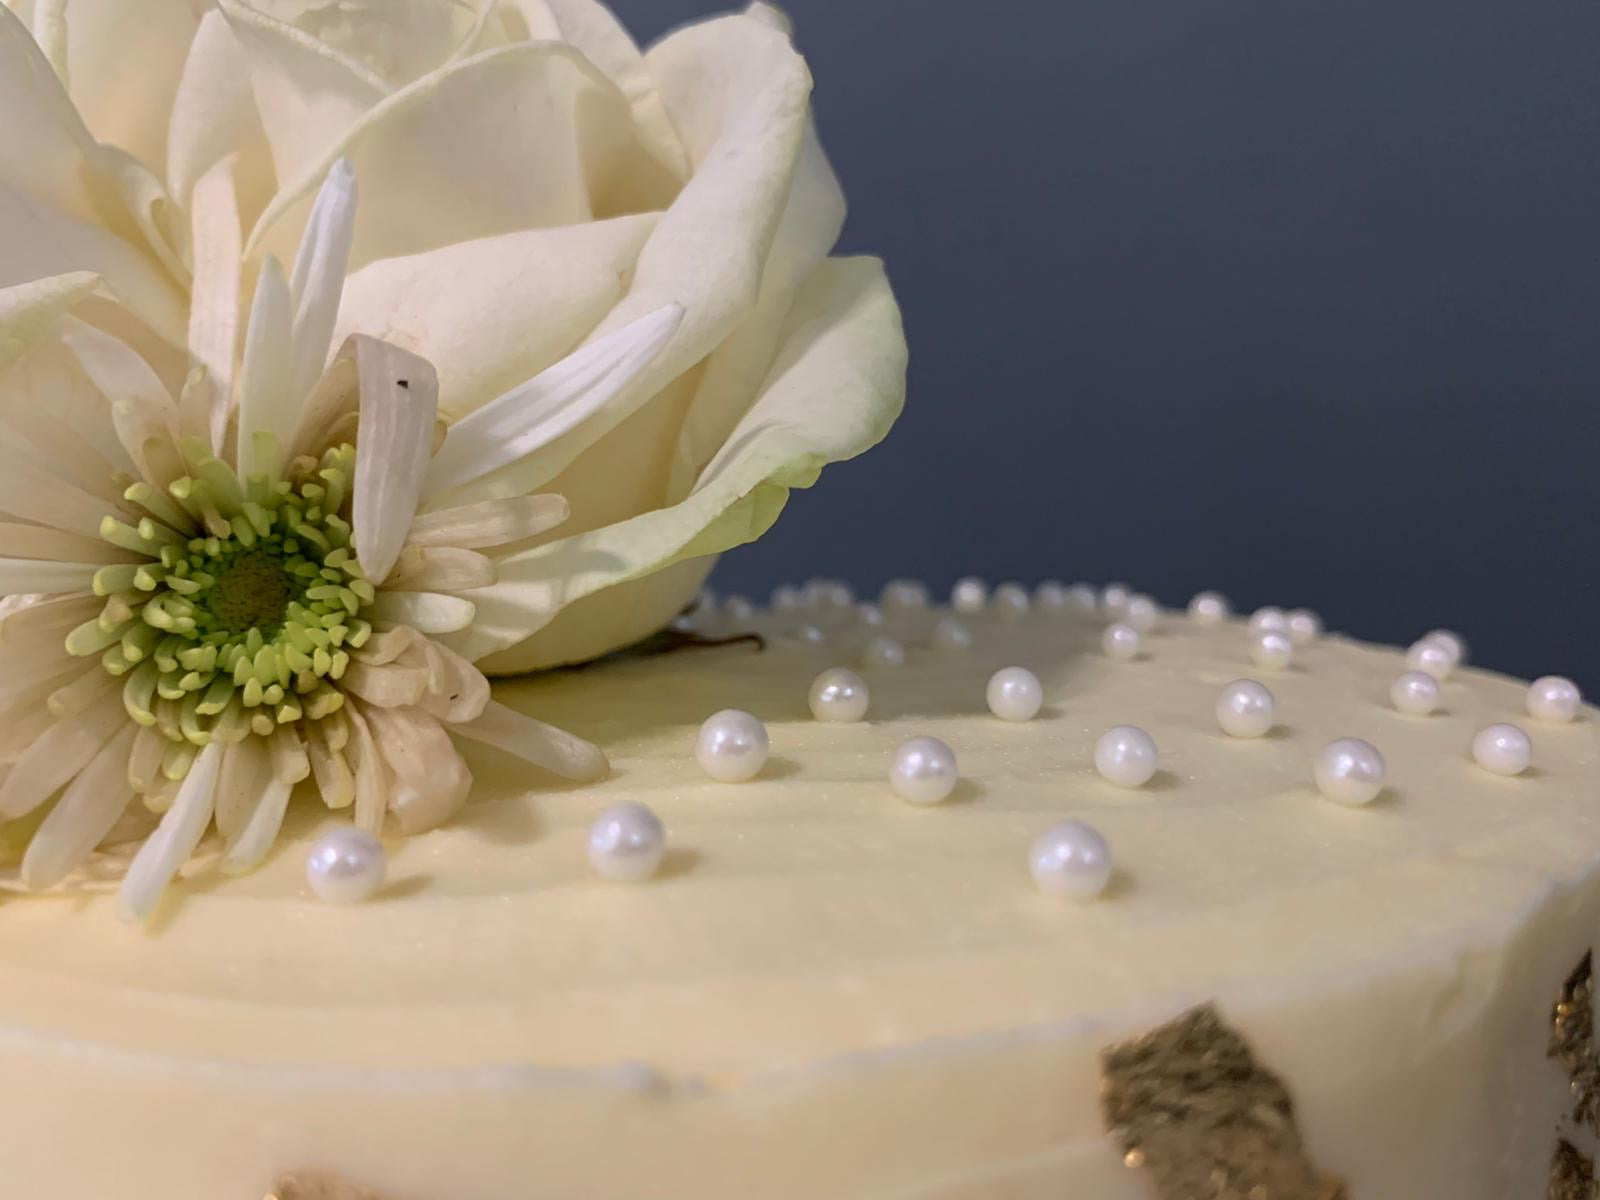 WHITE GOLD ROSE TIER CAKE